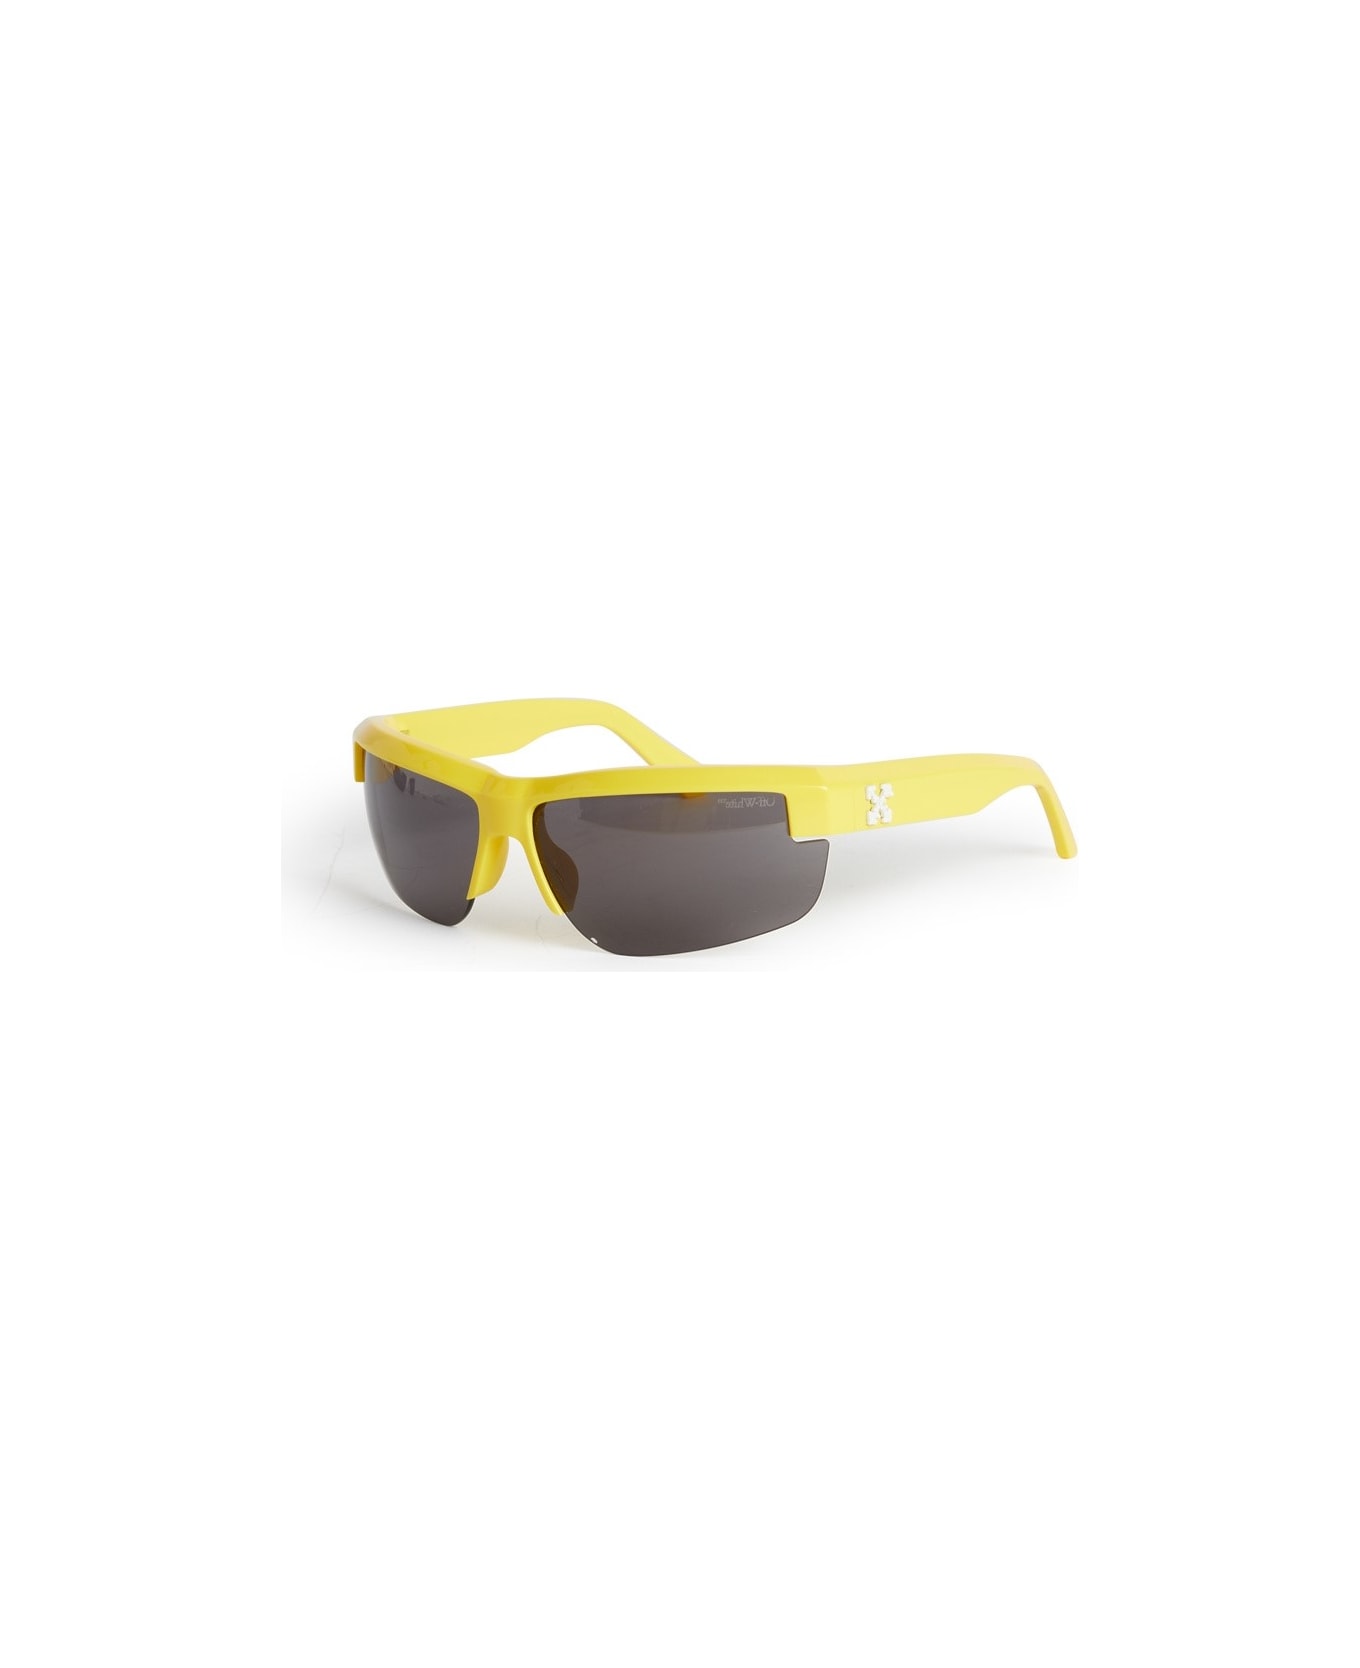 Off-White TOLEDO SUNGLASSES Sunglasses - Yellow